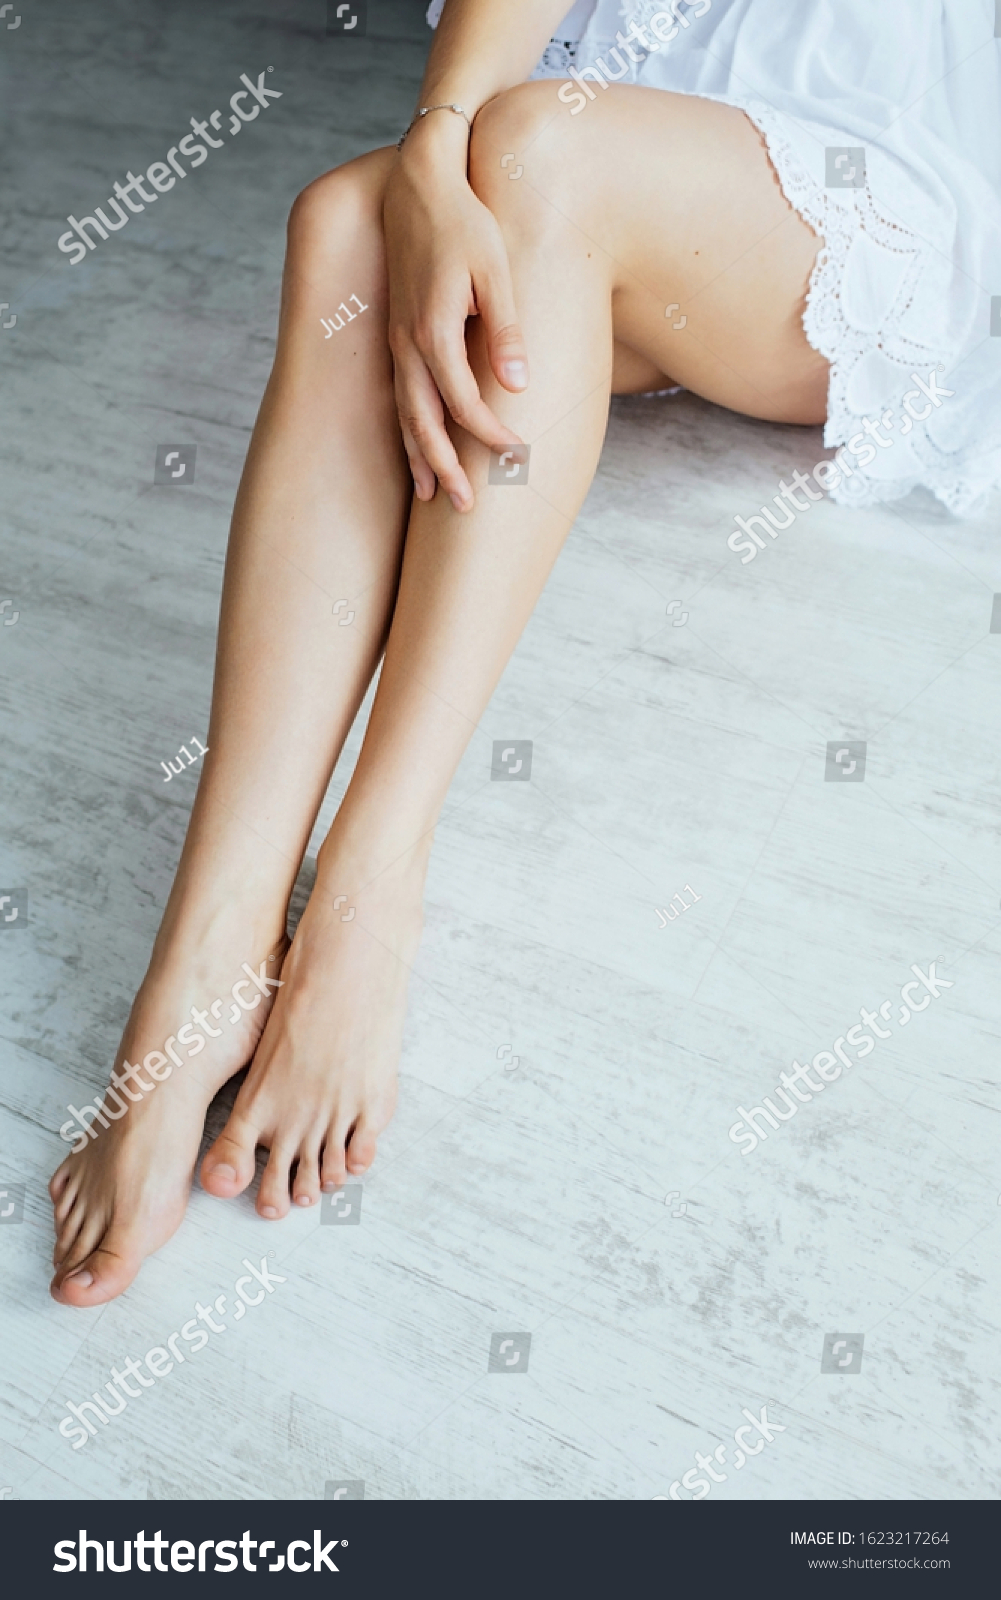 Scandalous Performer Update Sexy Legs On Floor Stock Photo (Edit Now) 1623217264